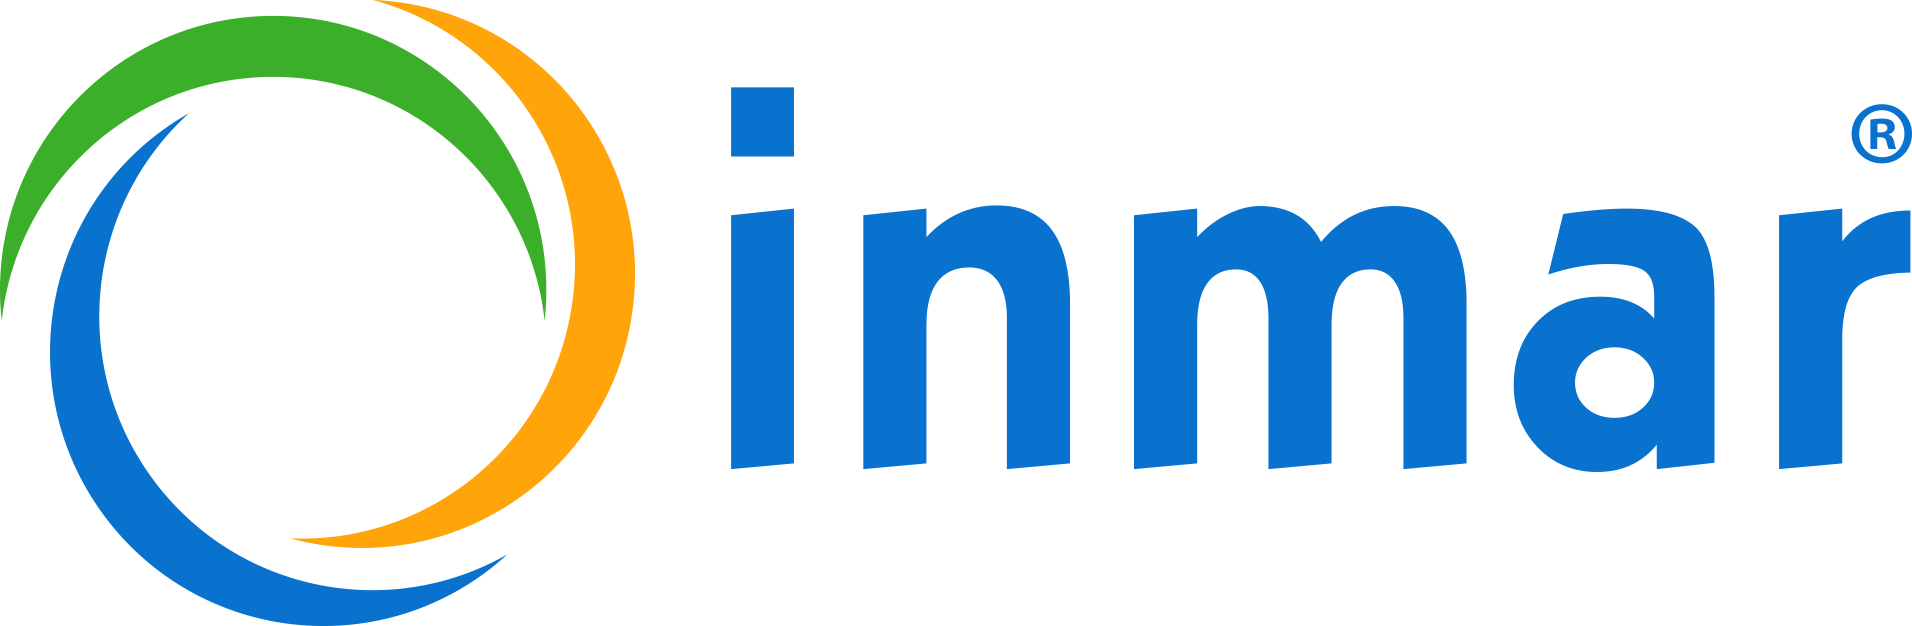 0_int_inmar-logo.png